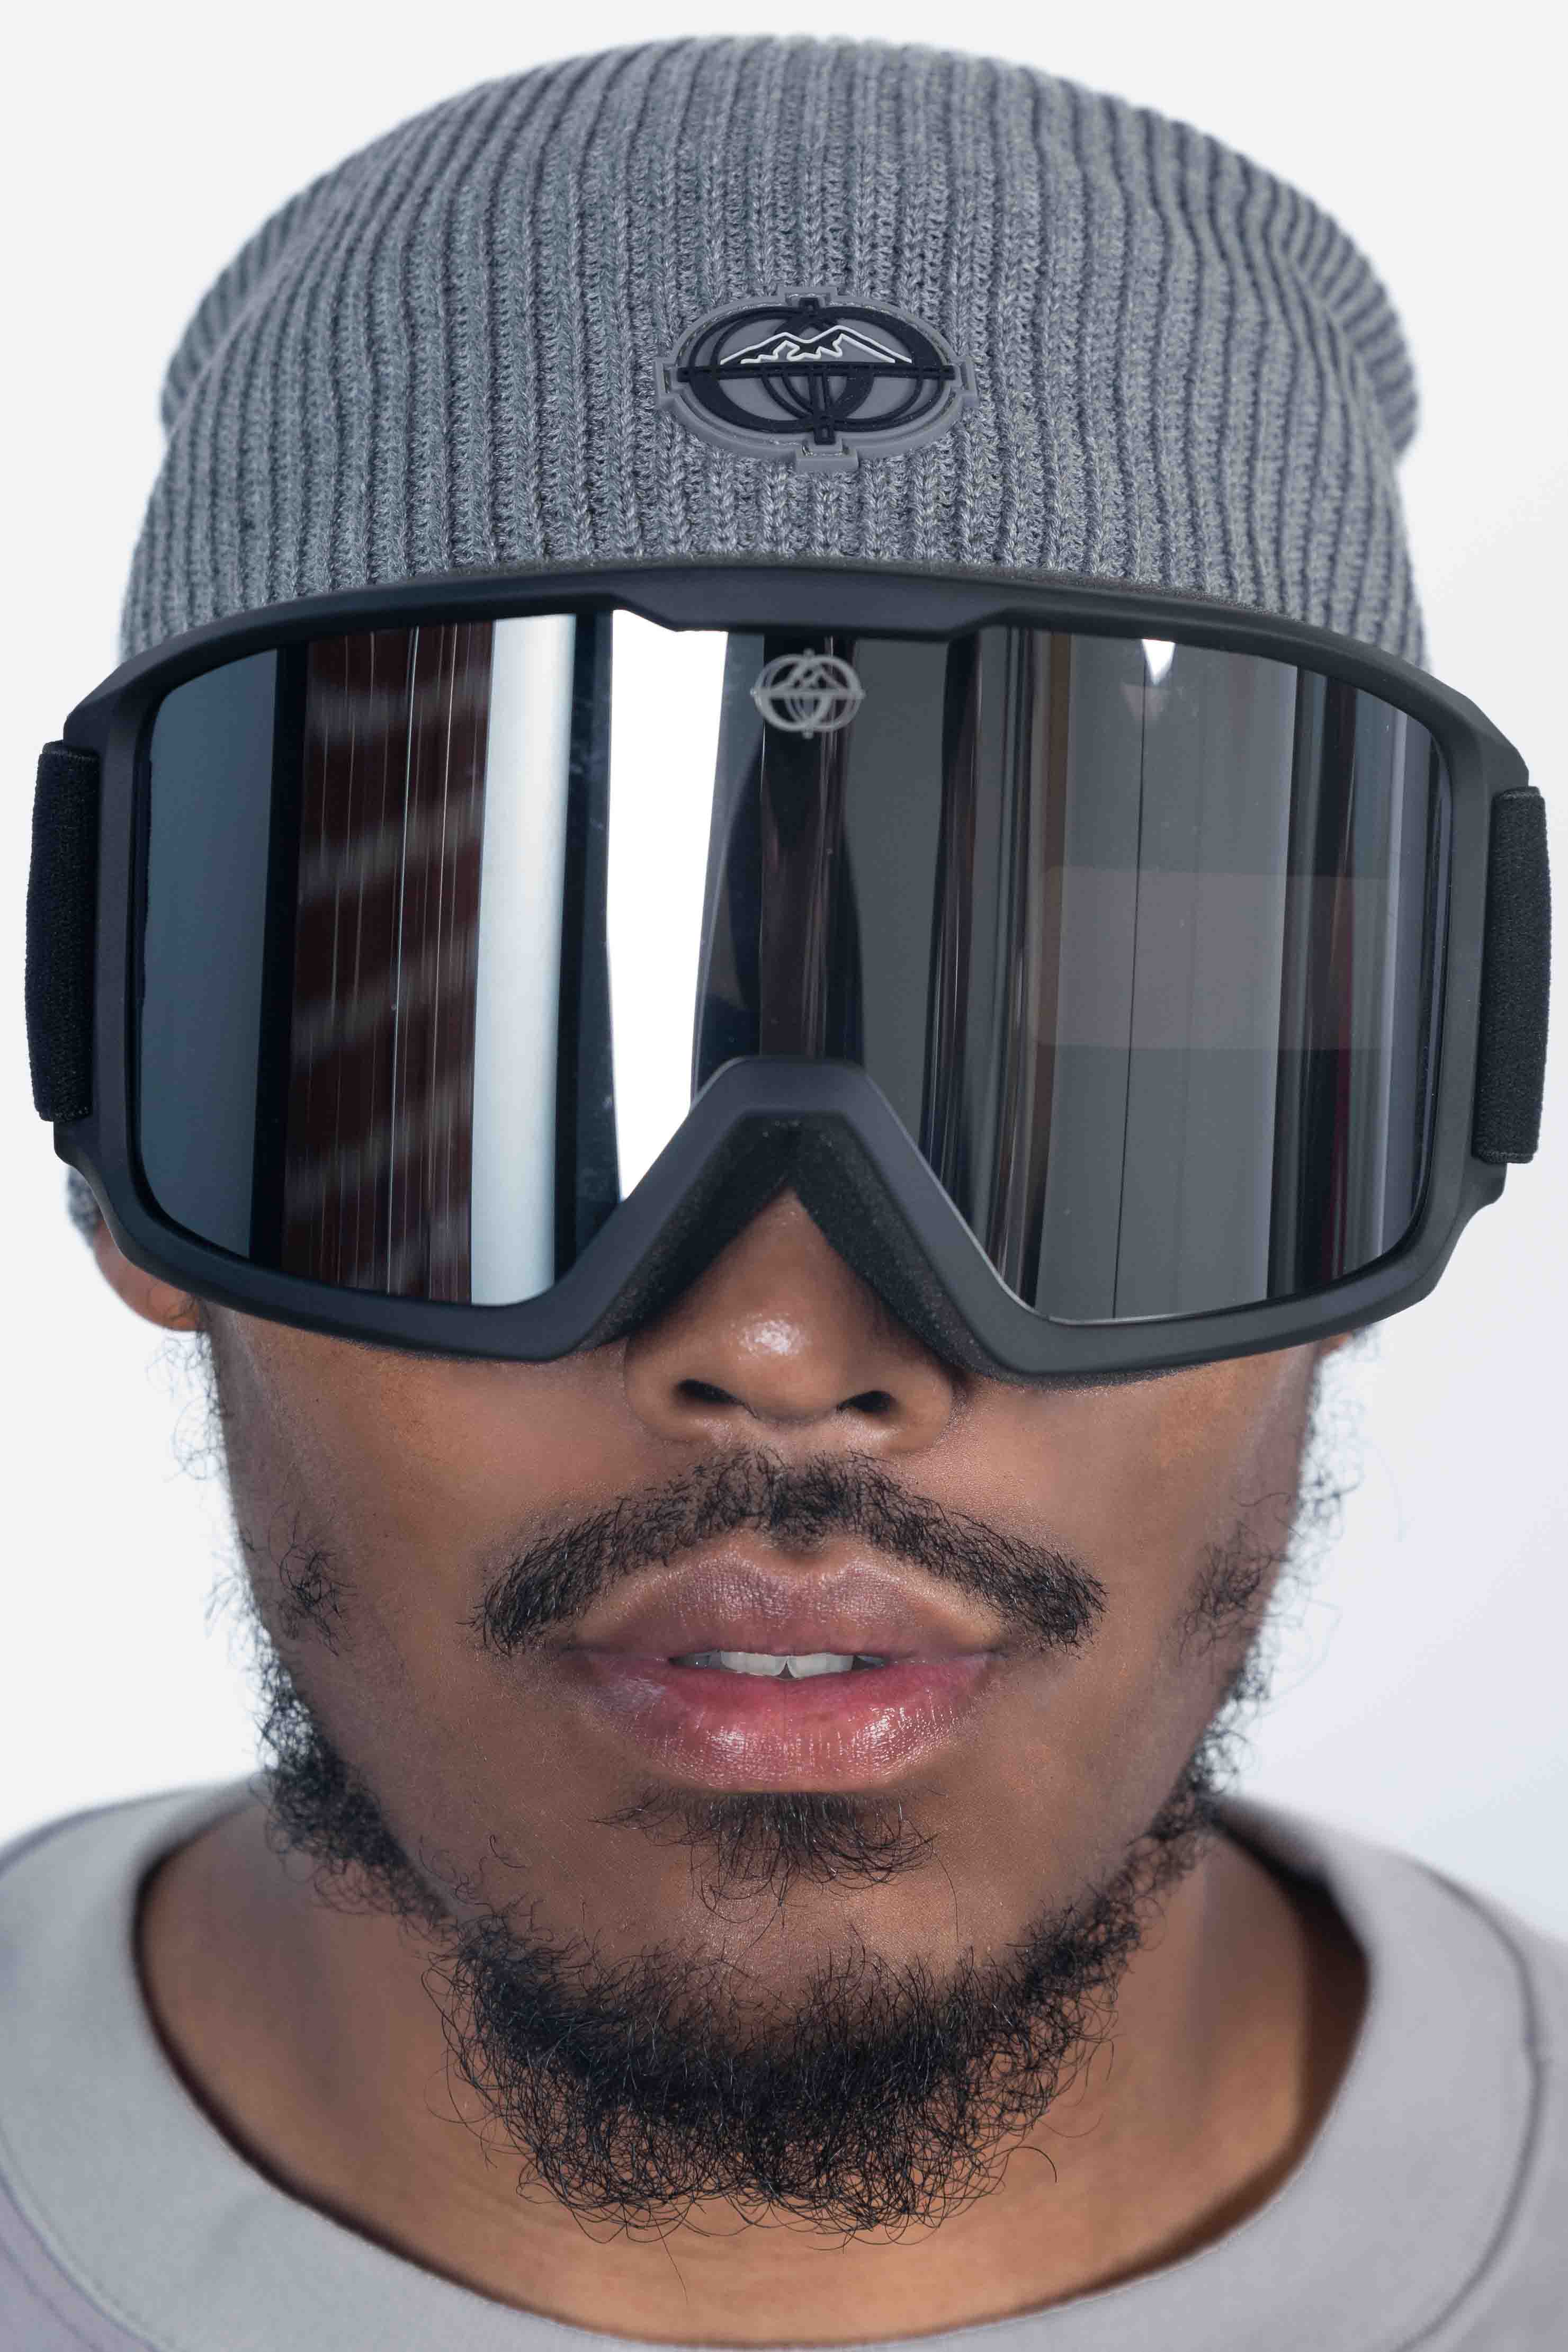 EXP VISION Snowboard Ski Goggles Men Women Youth, Kuwait